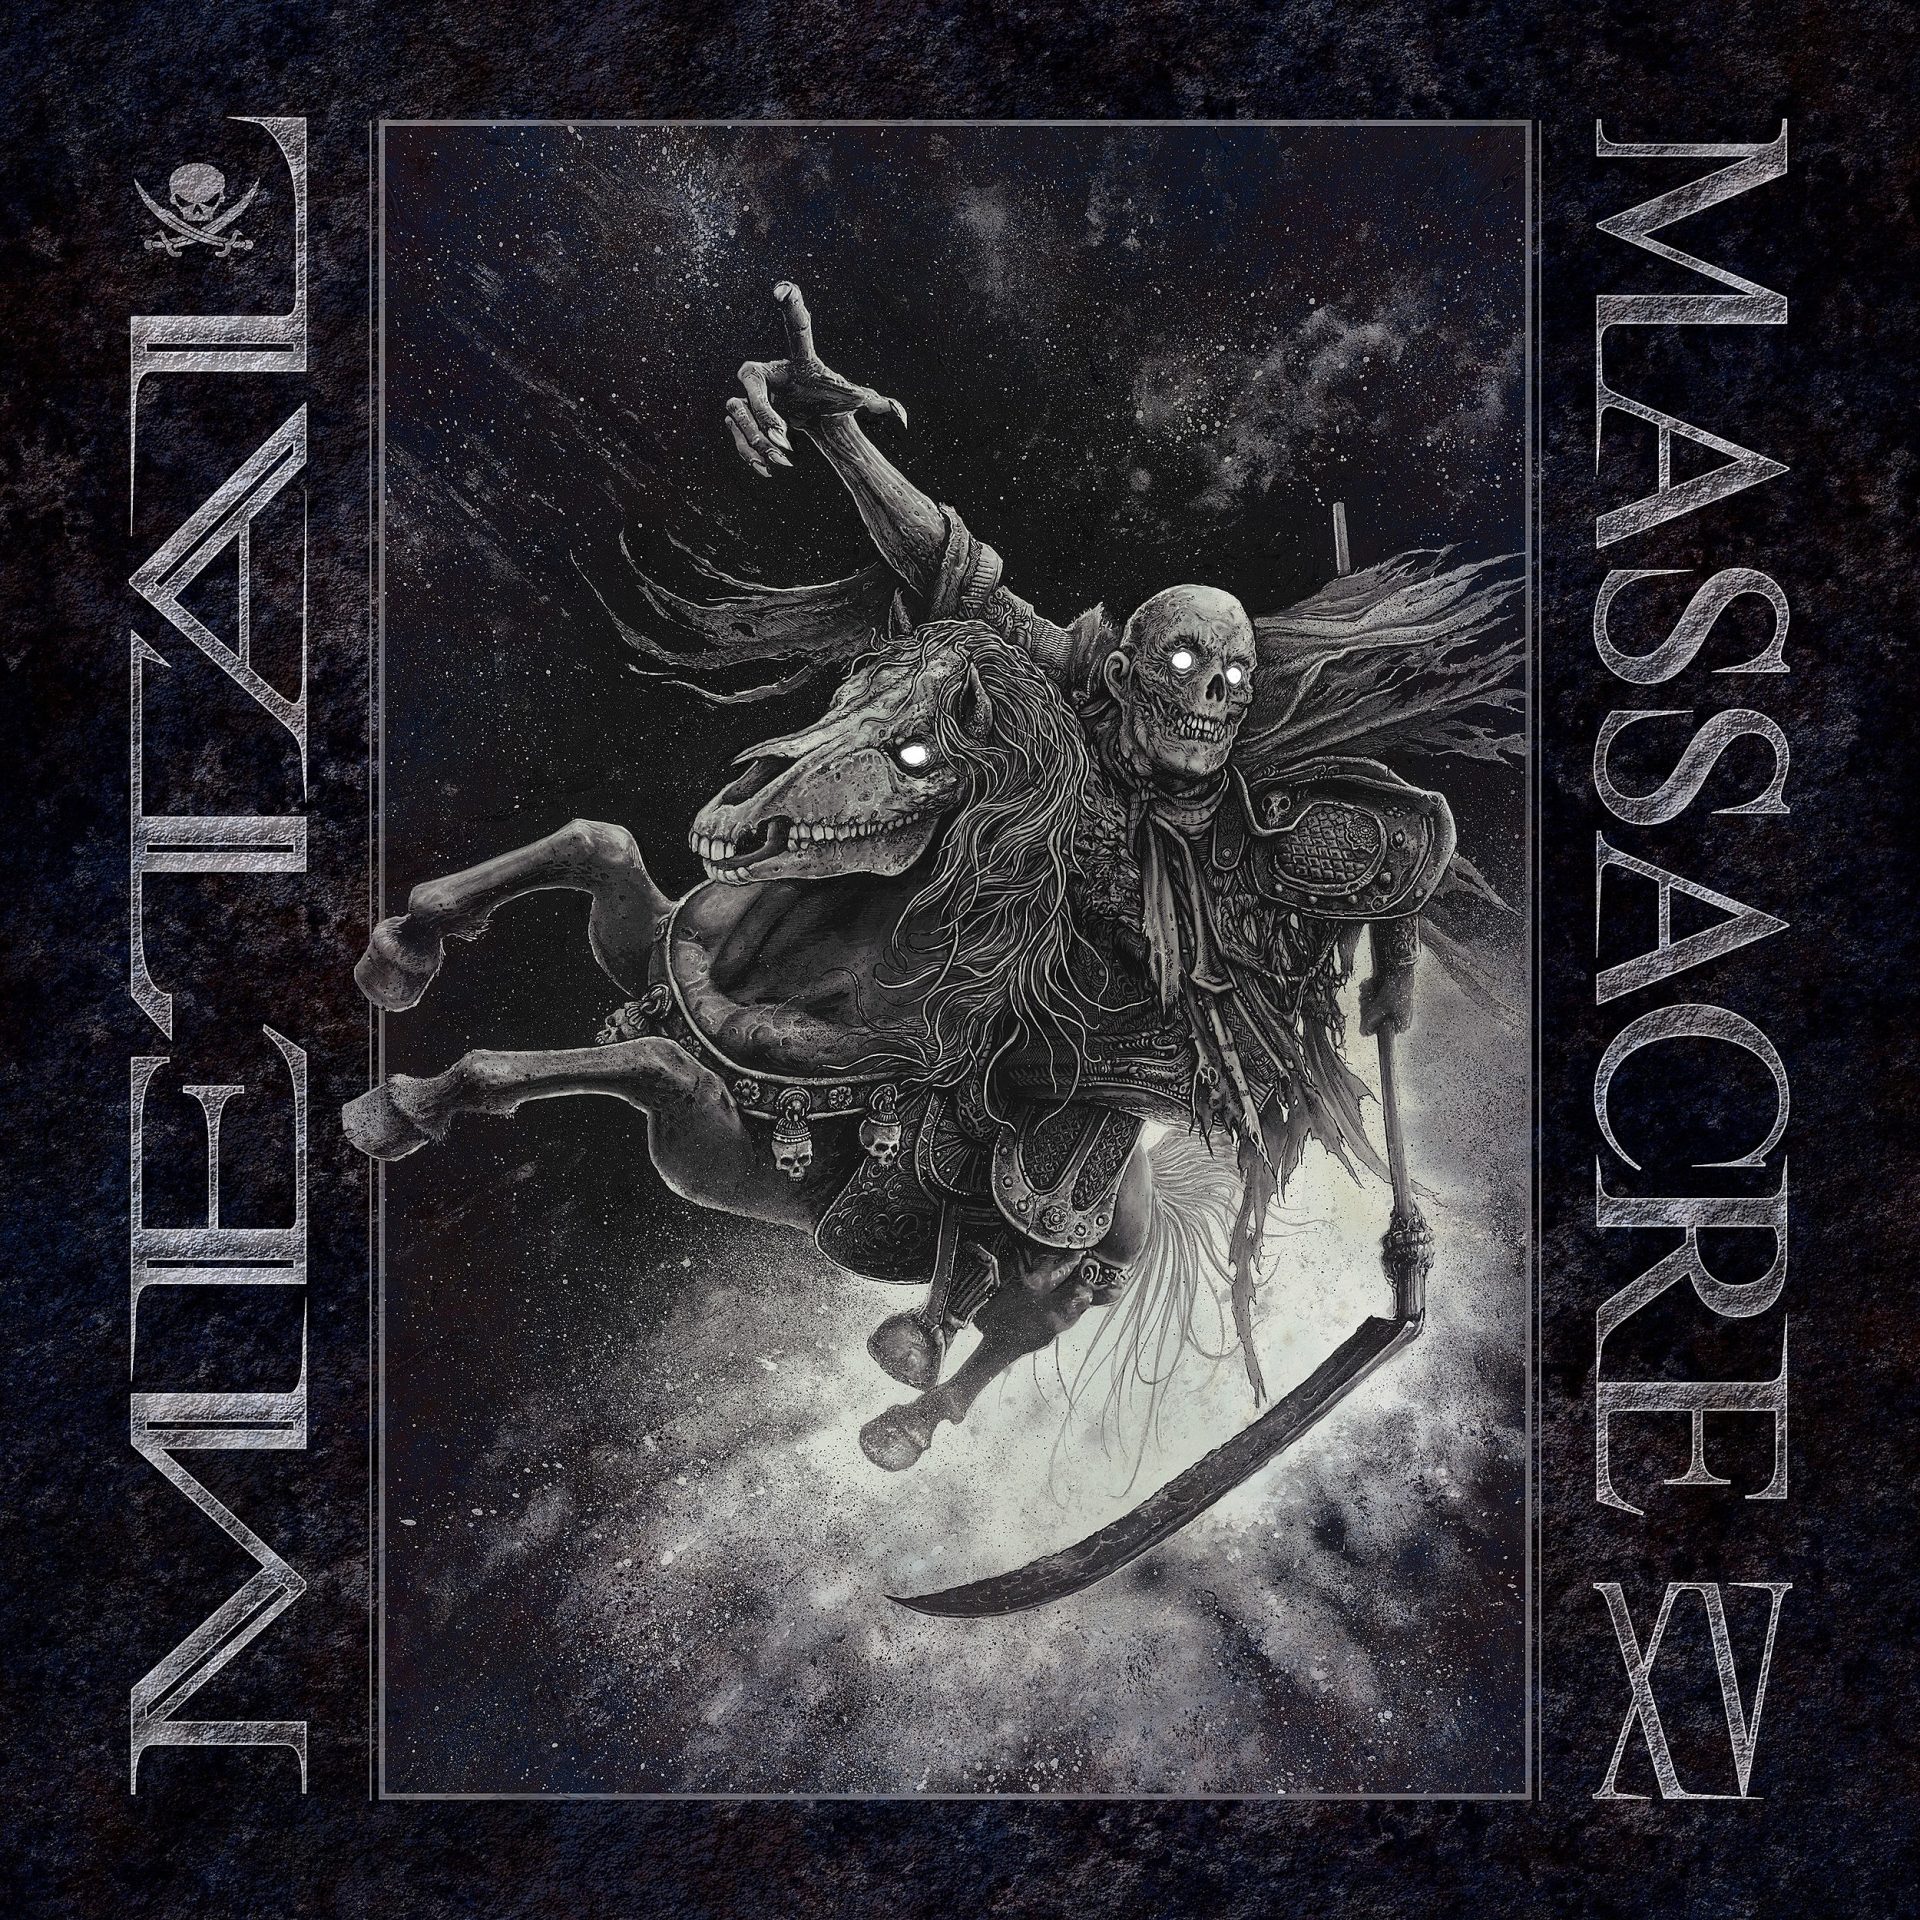 Metal Massacre XV art